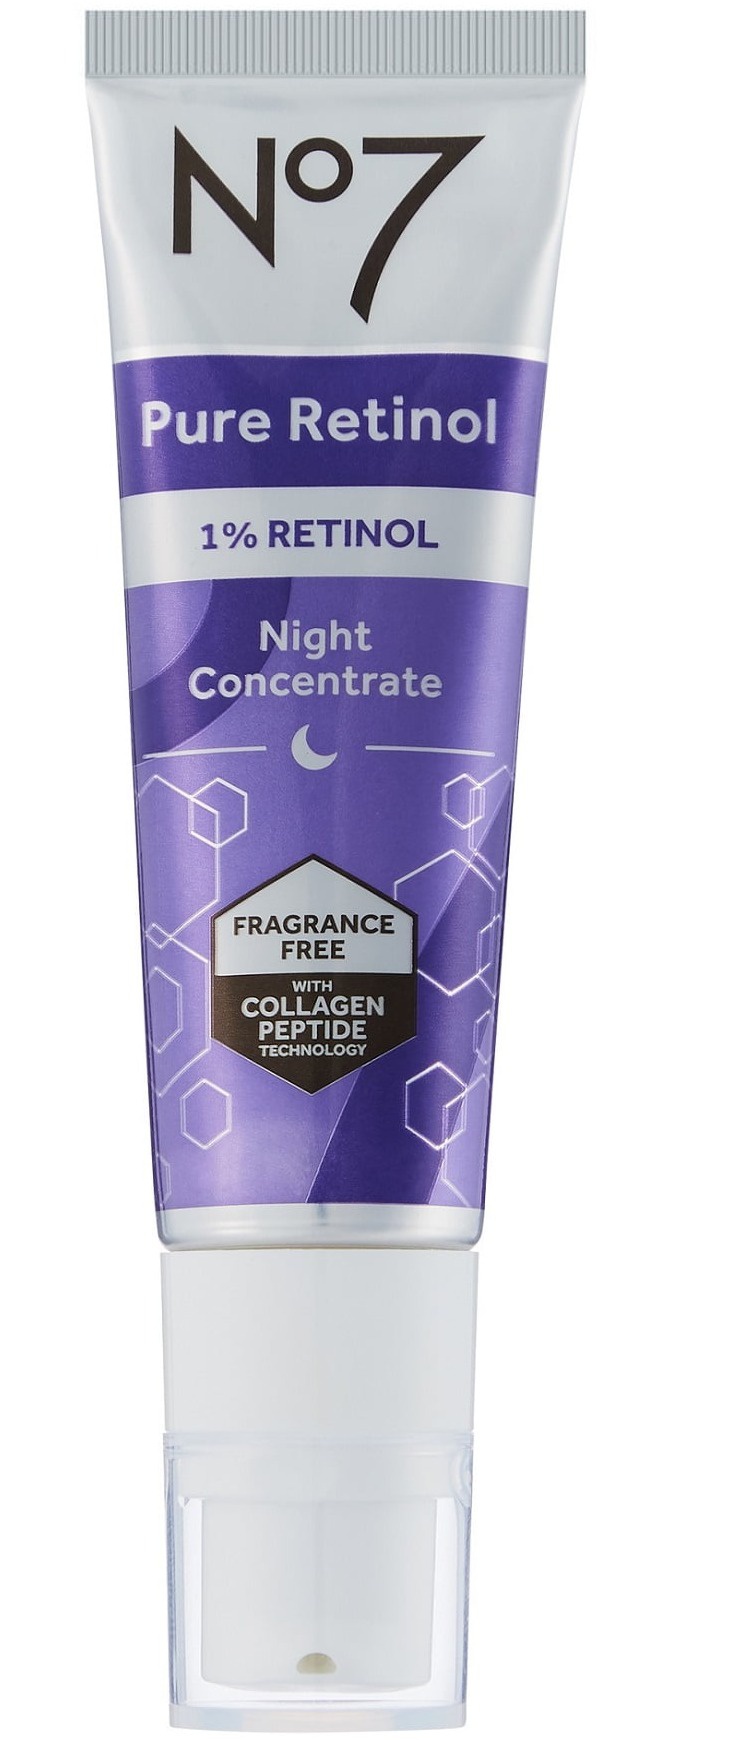 No. 7 Pure Retinol 1% Retinol Night Concentrate